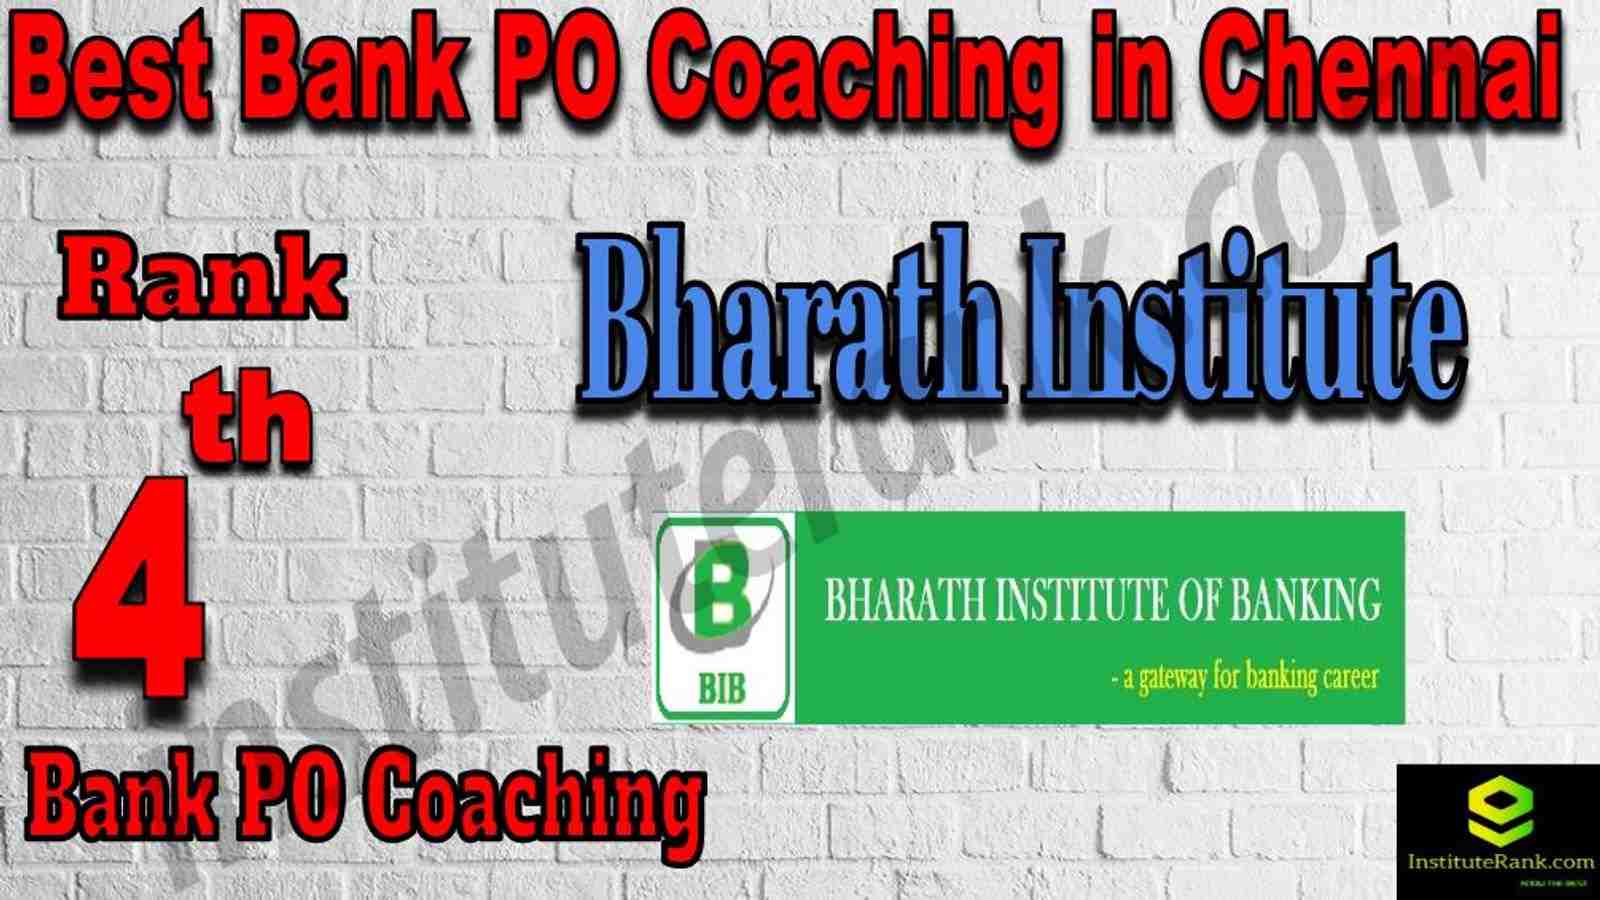 4th Best Bank PO Coaching in Chennai